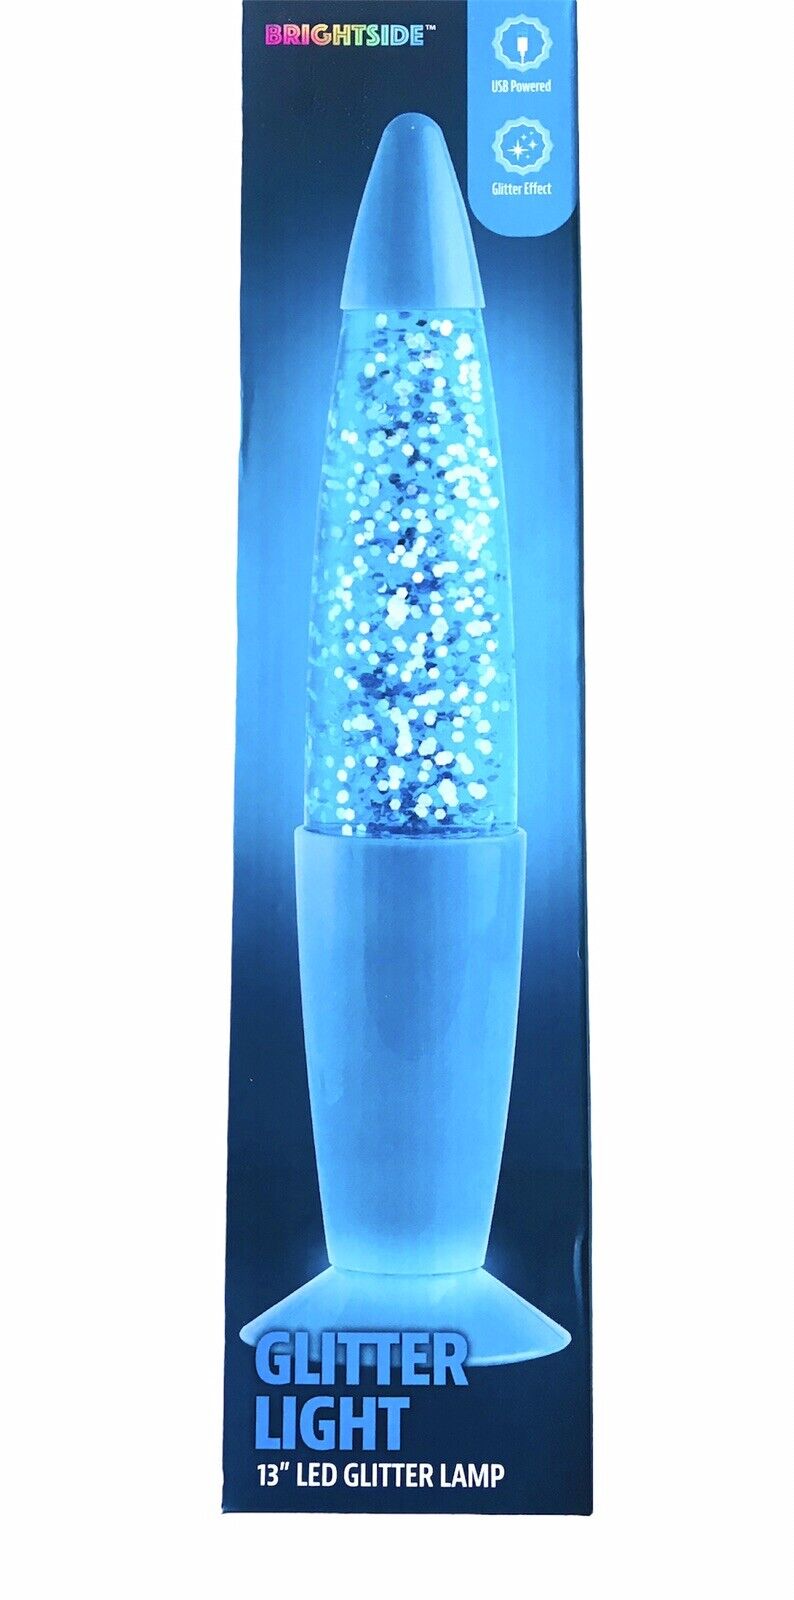 BRIGHTSIDE Glitter Light Lamp 13” LED Lamp Blue Water+ Silver Glitter SEALED BOX